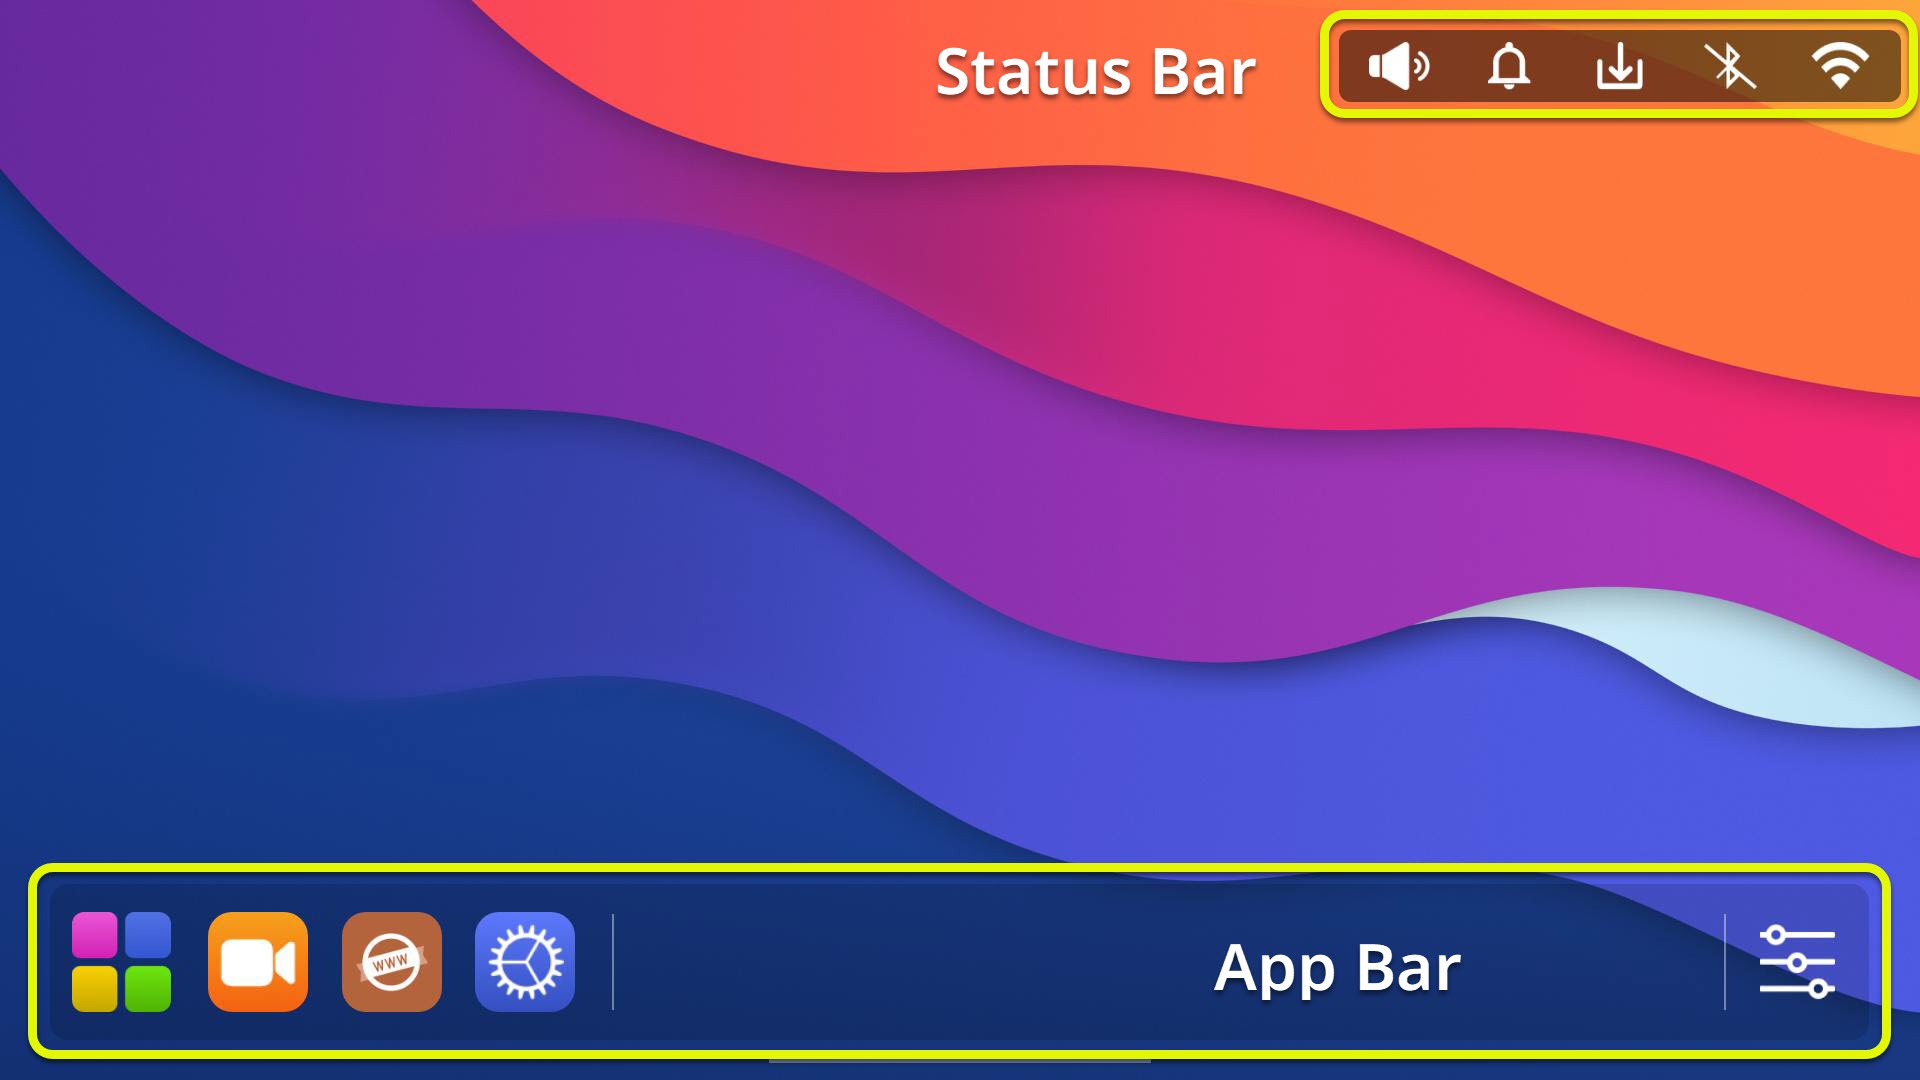 A new home screen UI